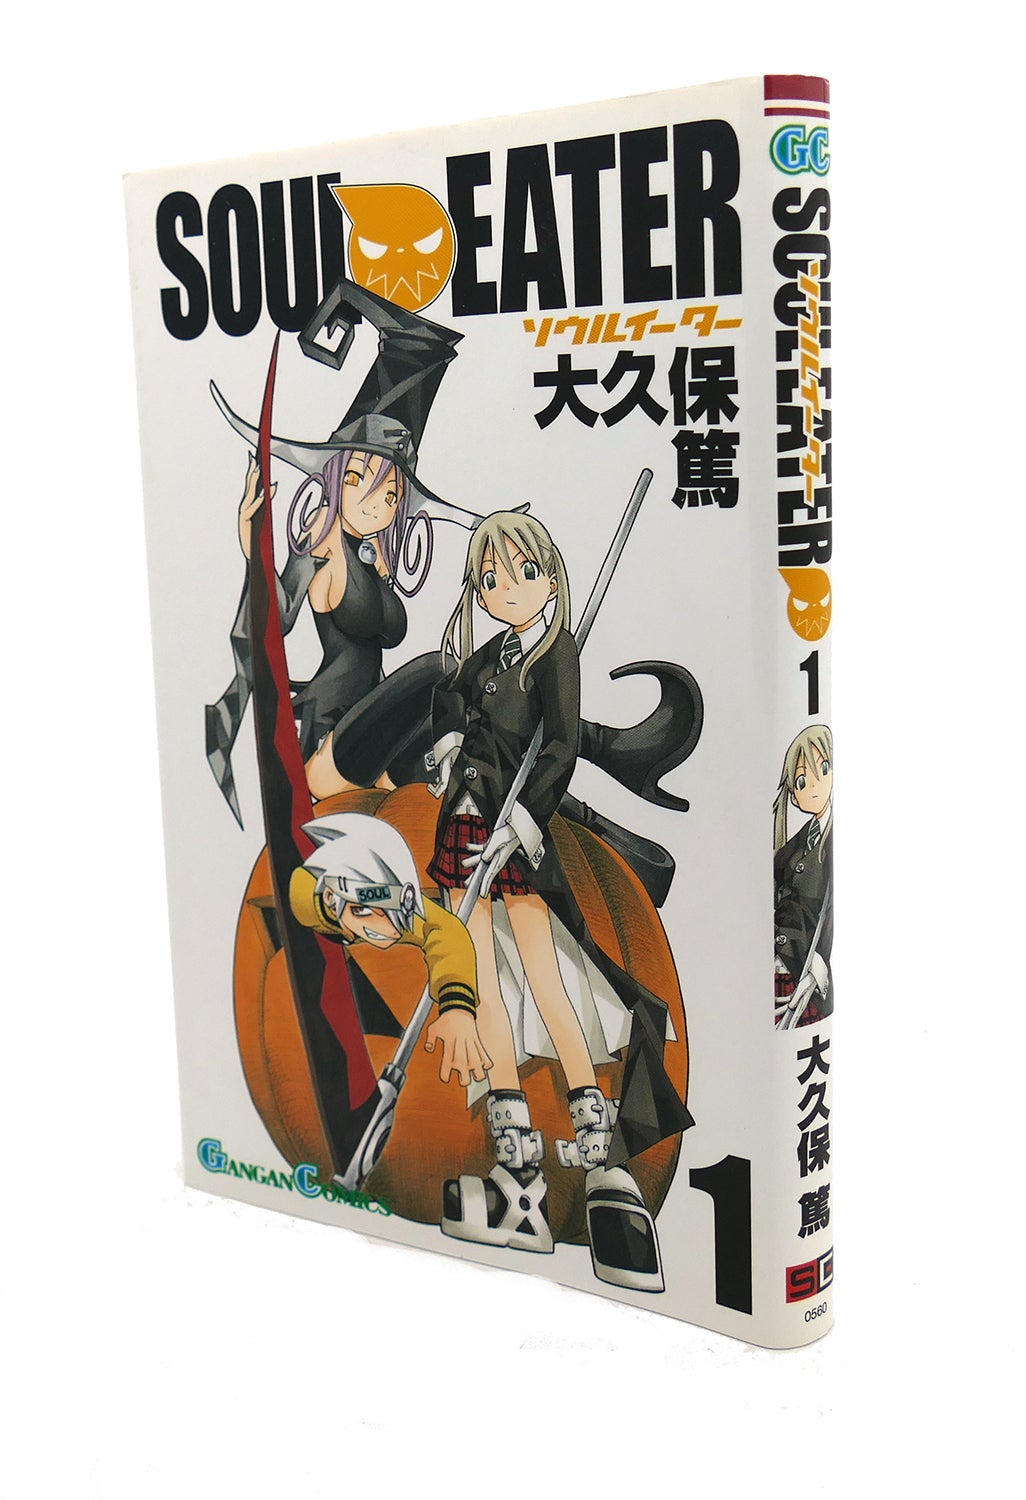 En que manga continua el anime Soul Eater